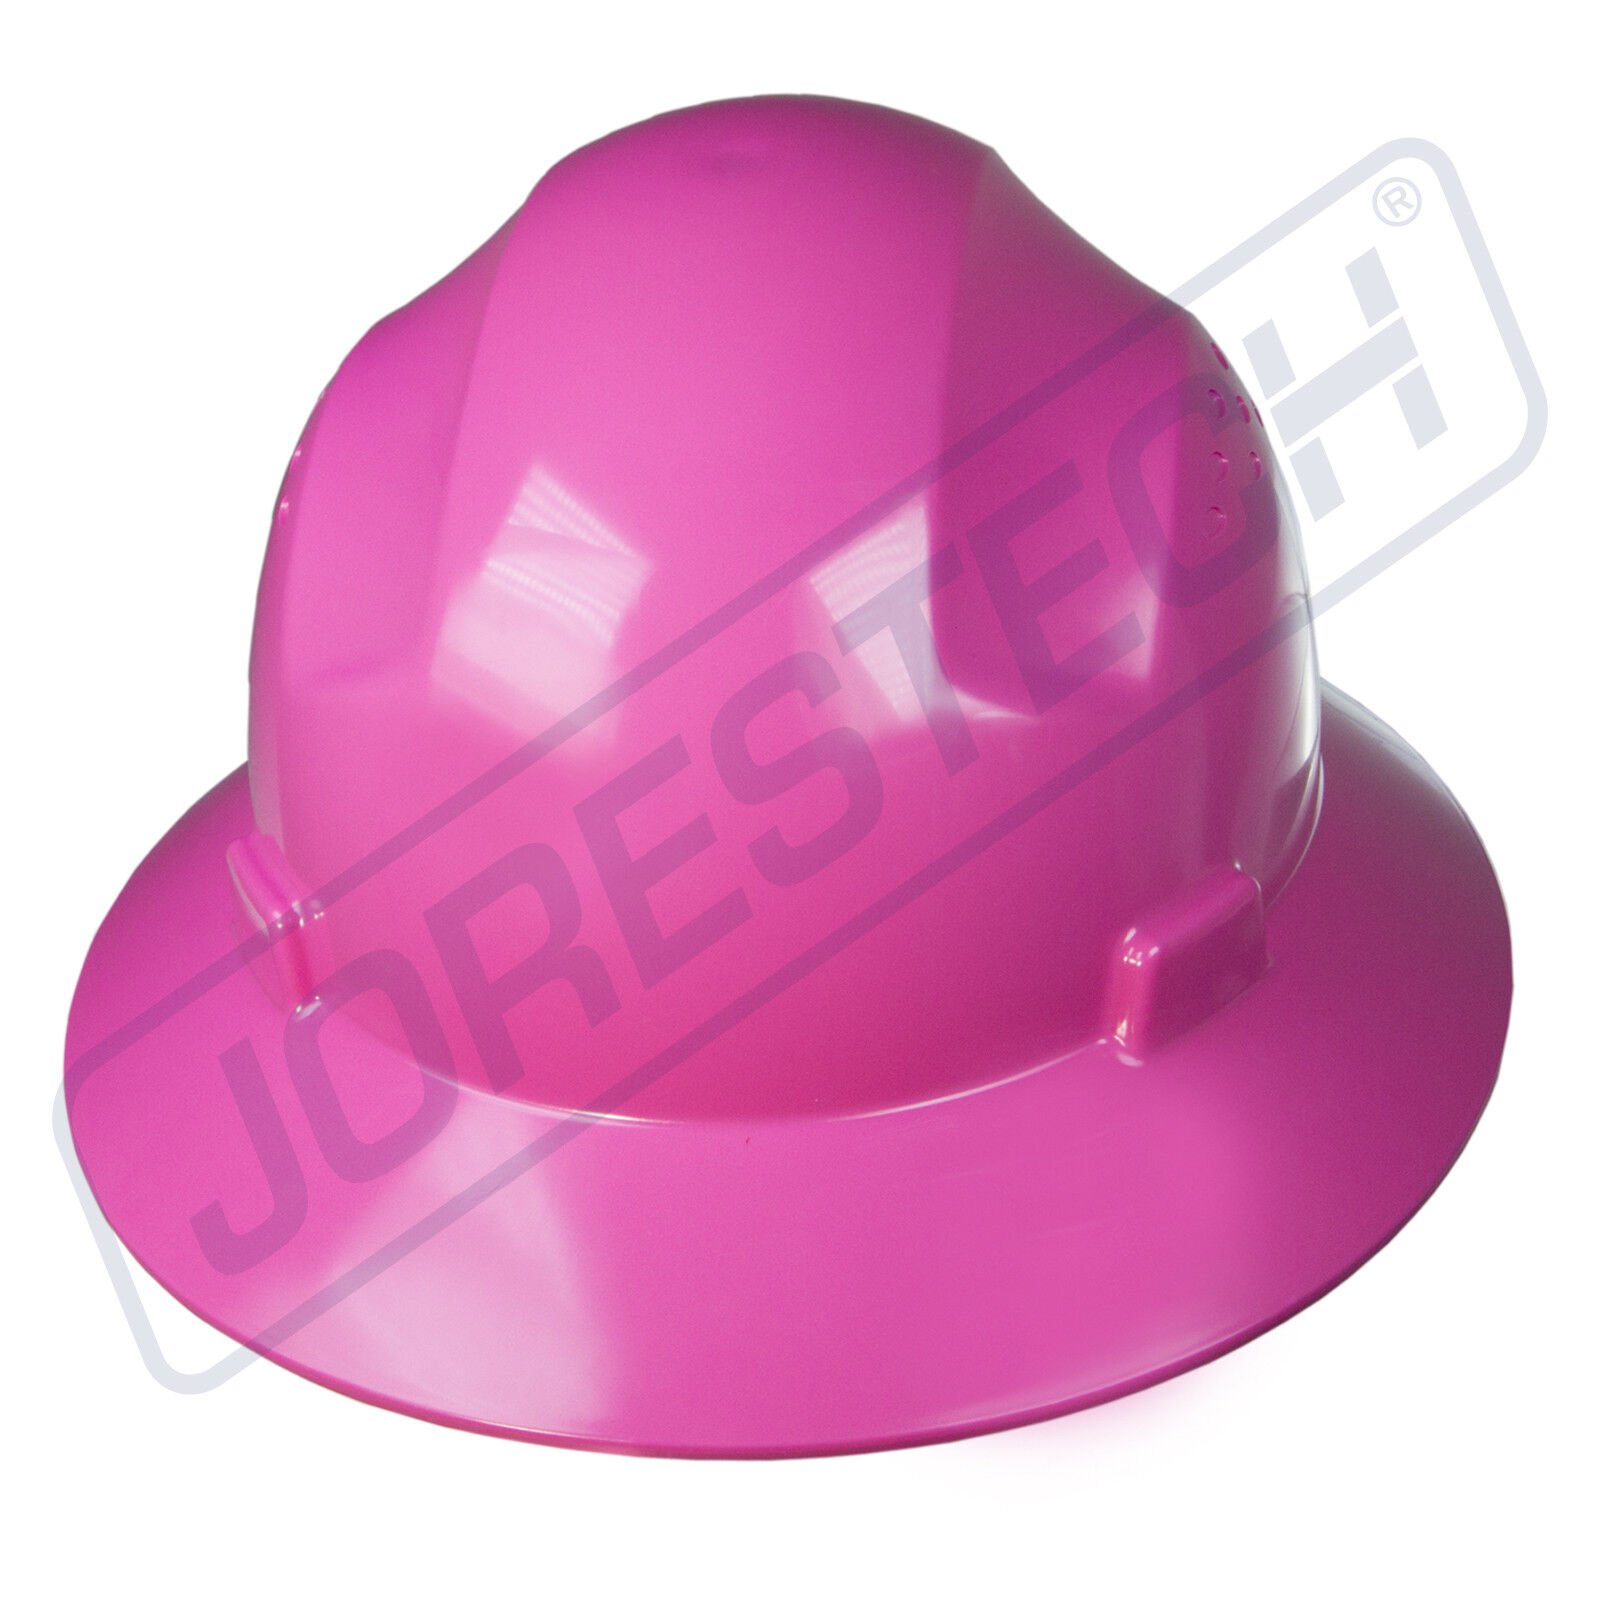 Каска в форме шляпы. Каска защитная ковбойская шляпа. Каска розовая строительная женская. Каска строительная в форме шляпы. Строительная каска в виде ковбойской шляпы.